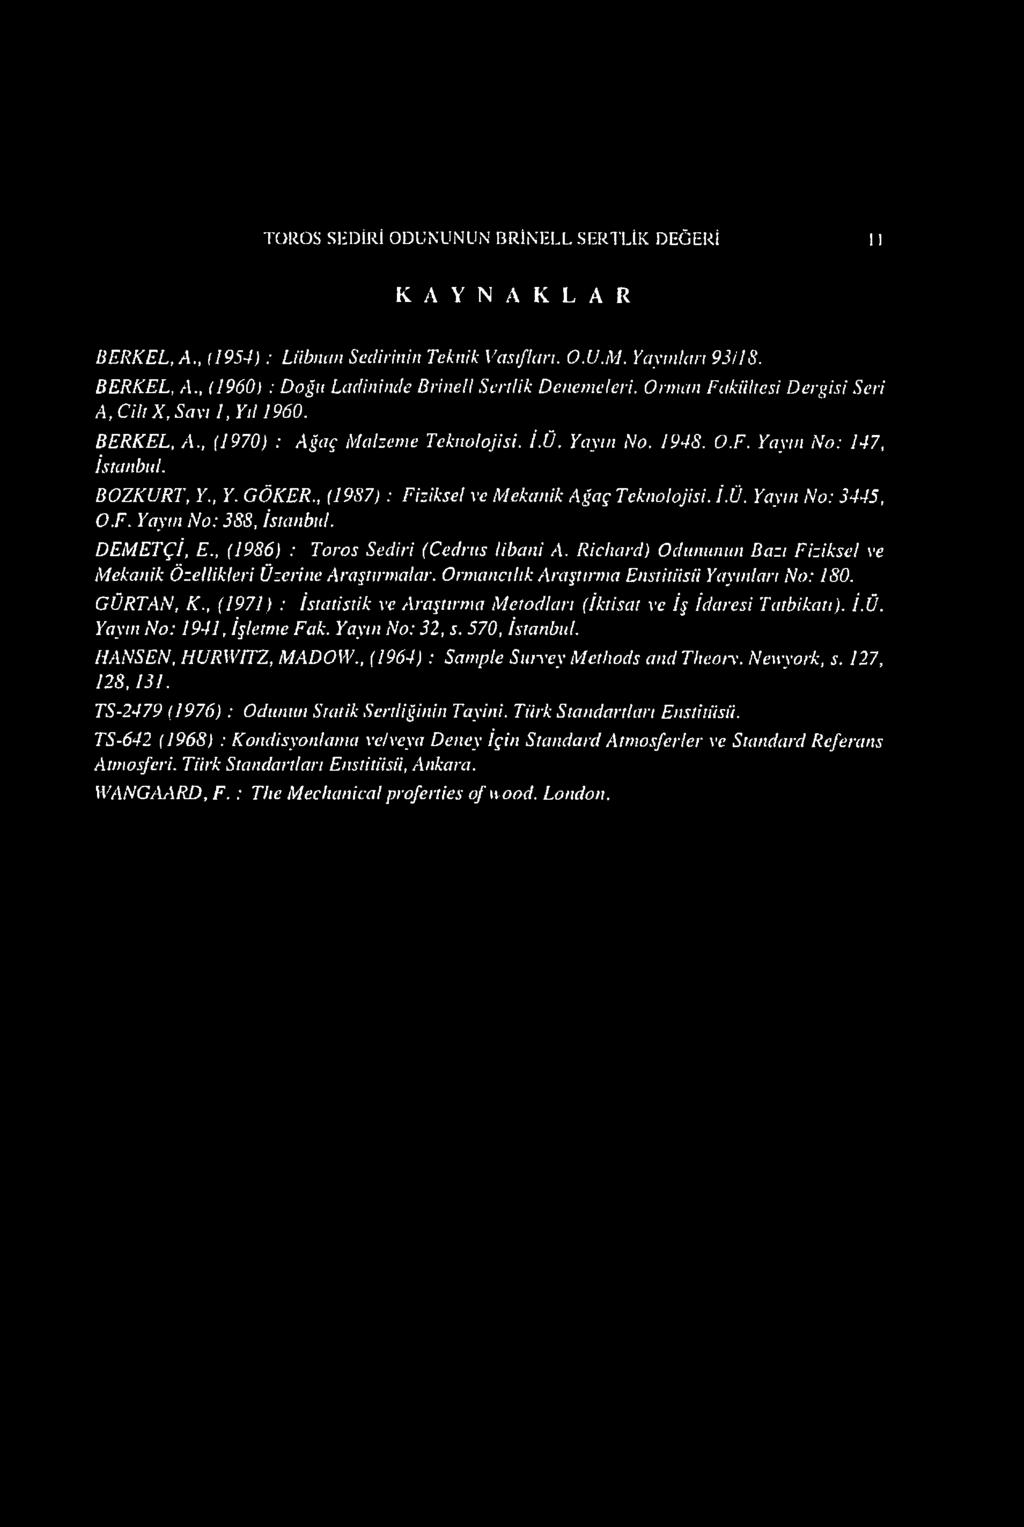 , (1987) : Fiziksel ve Mekanik Ağaç Teknolojisi. İ.Ü. Yayın No: 3445, O.F. Yayın No: 388, İstanbul. DEMETÇİ, E., (1986) : Toros Sediri (Cedrus libani A.